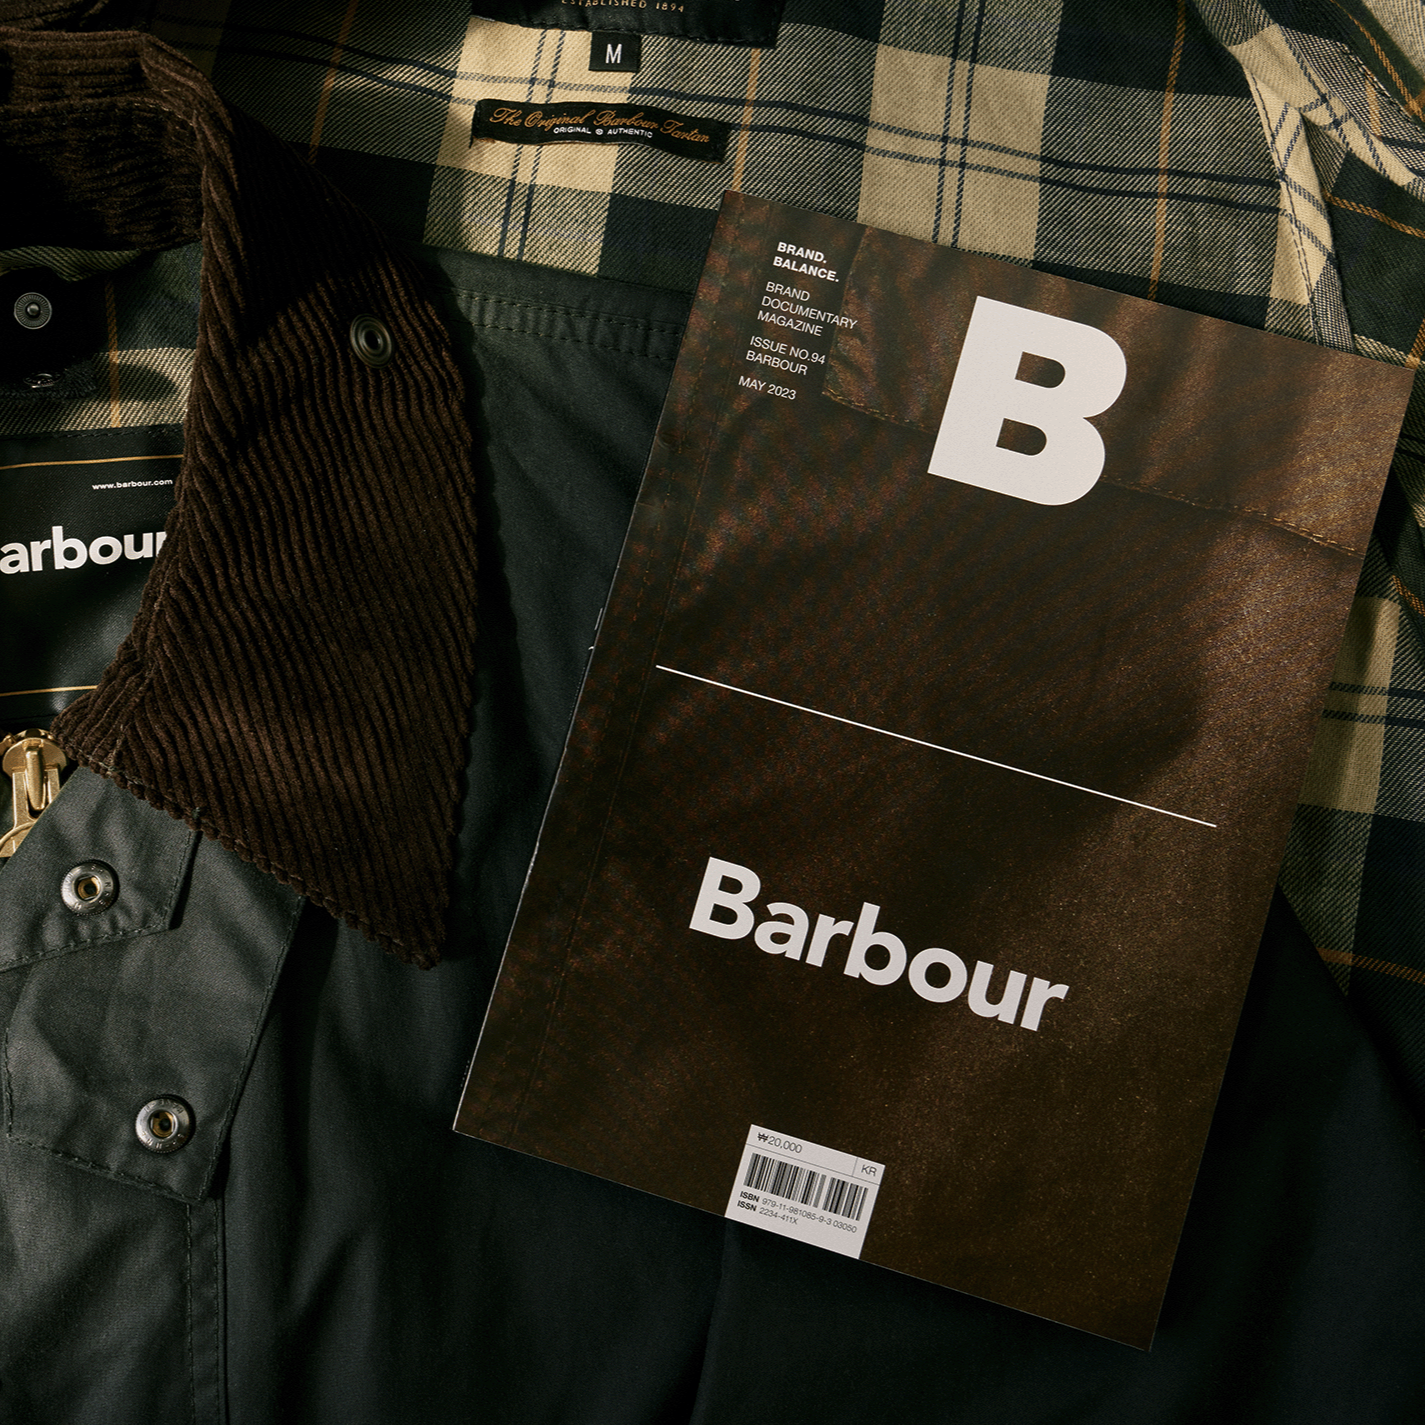 Magazine B Issue #94 - Barbour